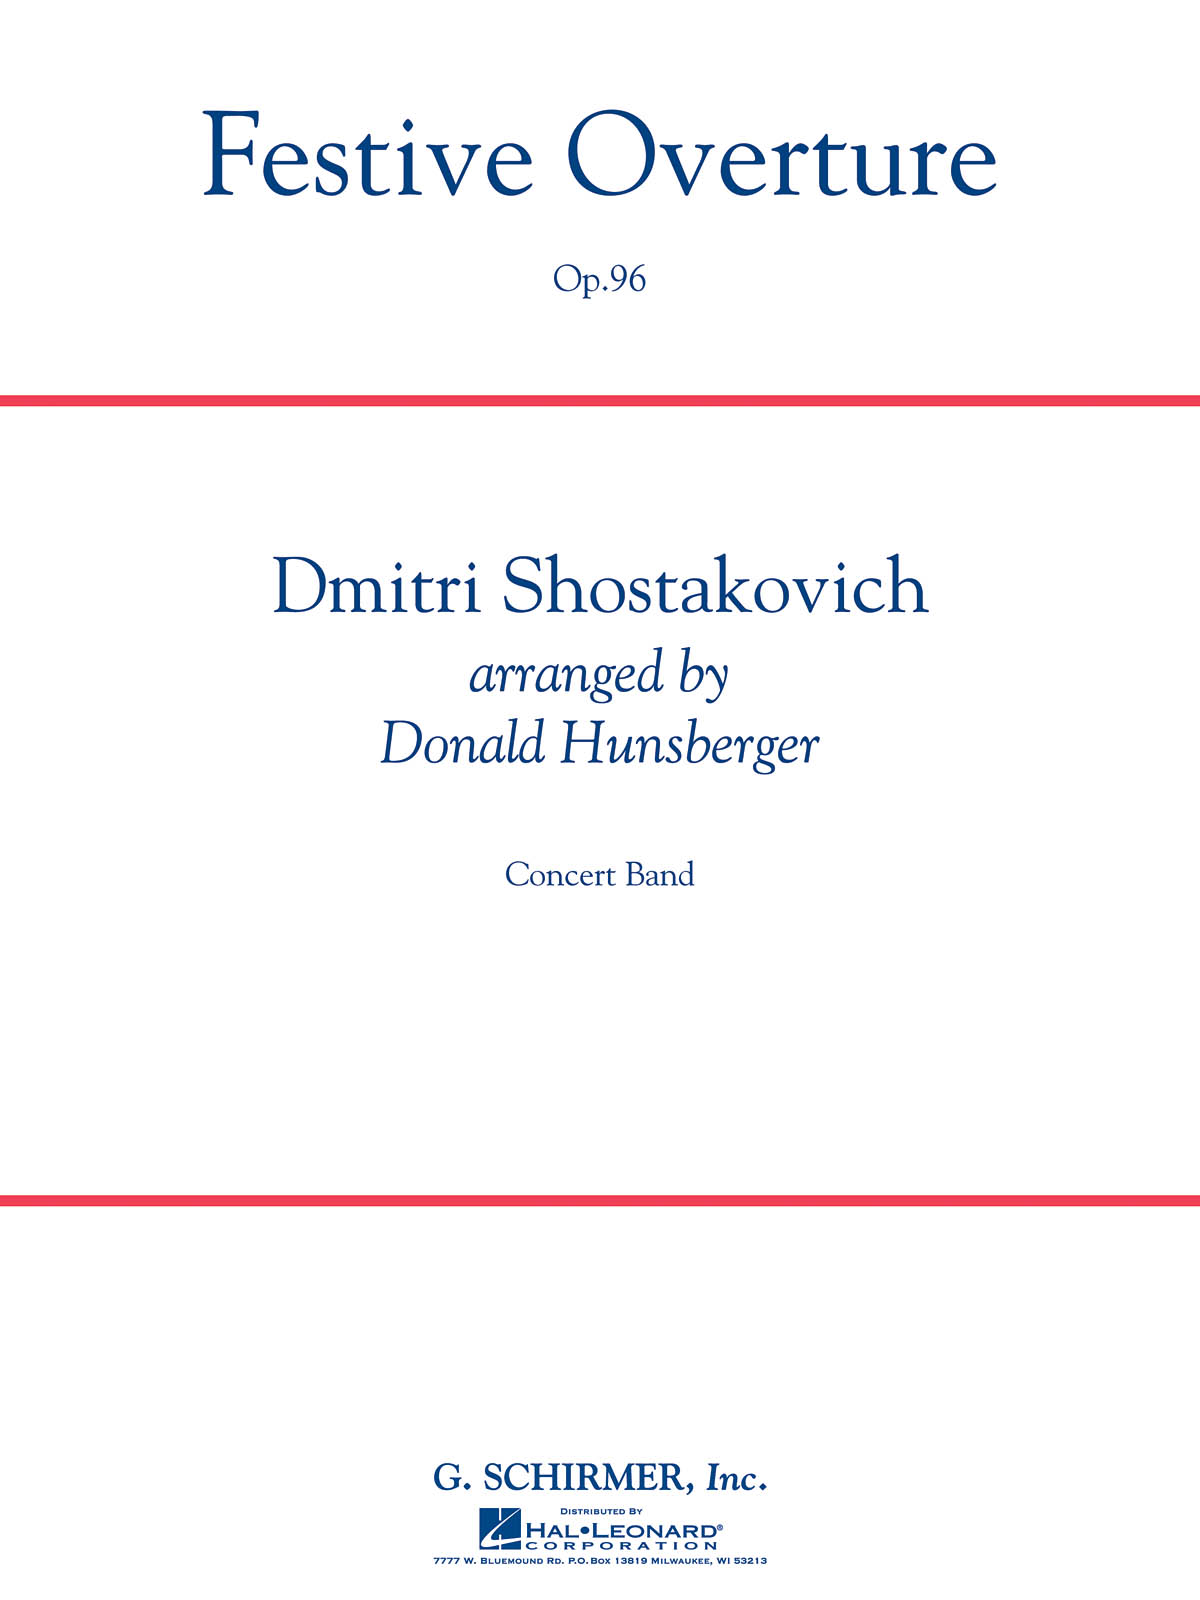 Dimitri Shostakovich: Festive Overture op. 96: Concert Band